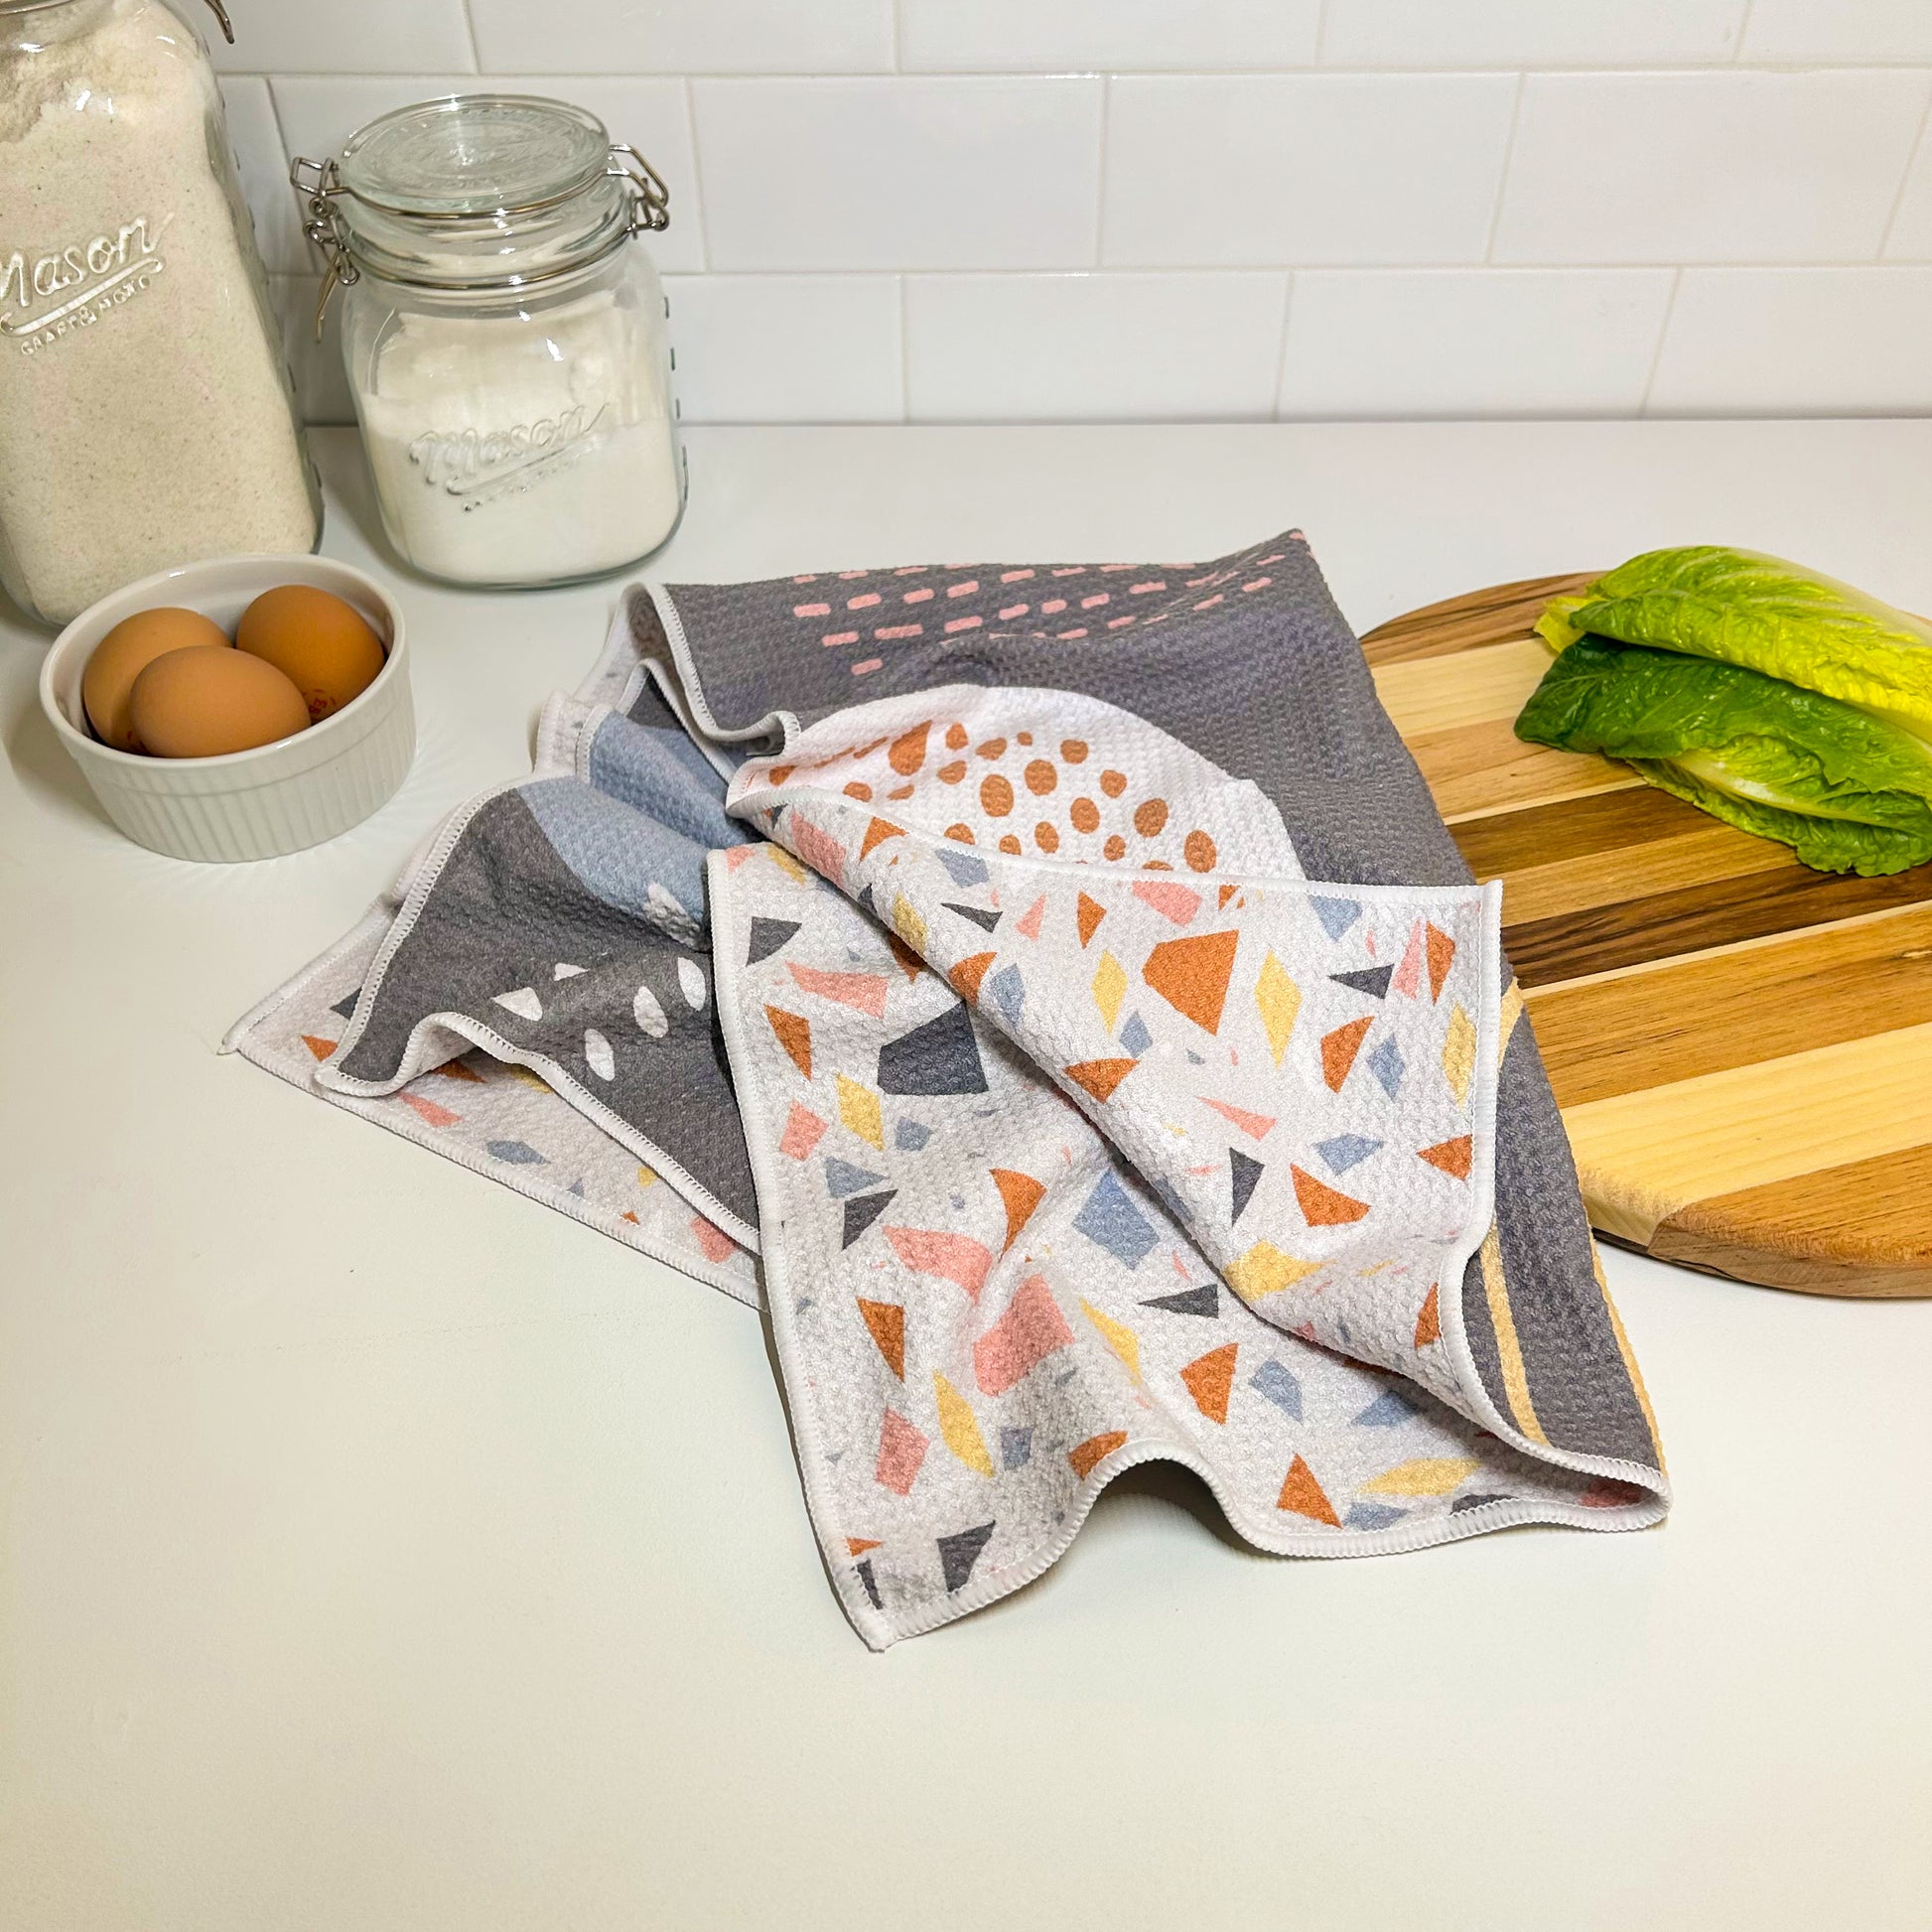 Bohemian Kitchen Towels Tan Hand Towels for Bathroom Hand Set